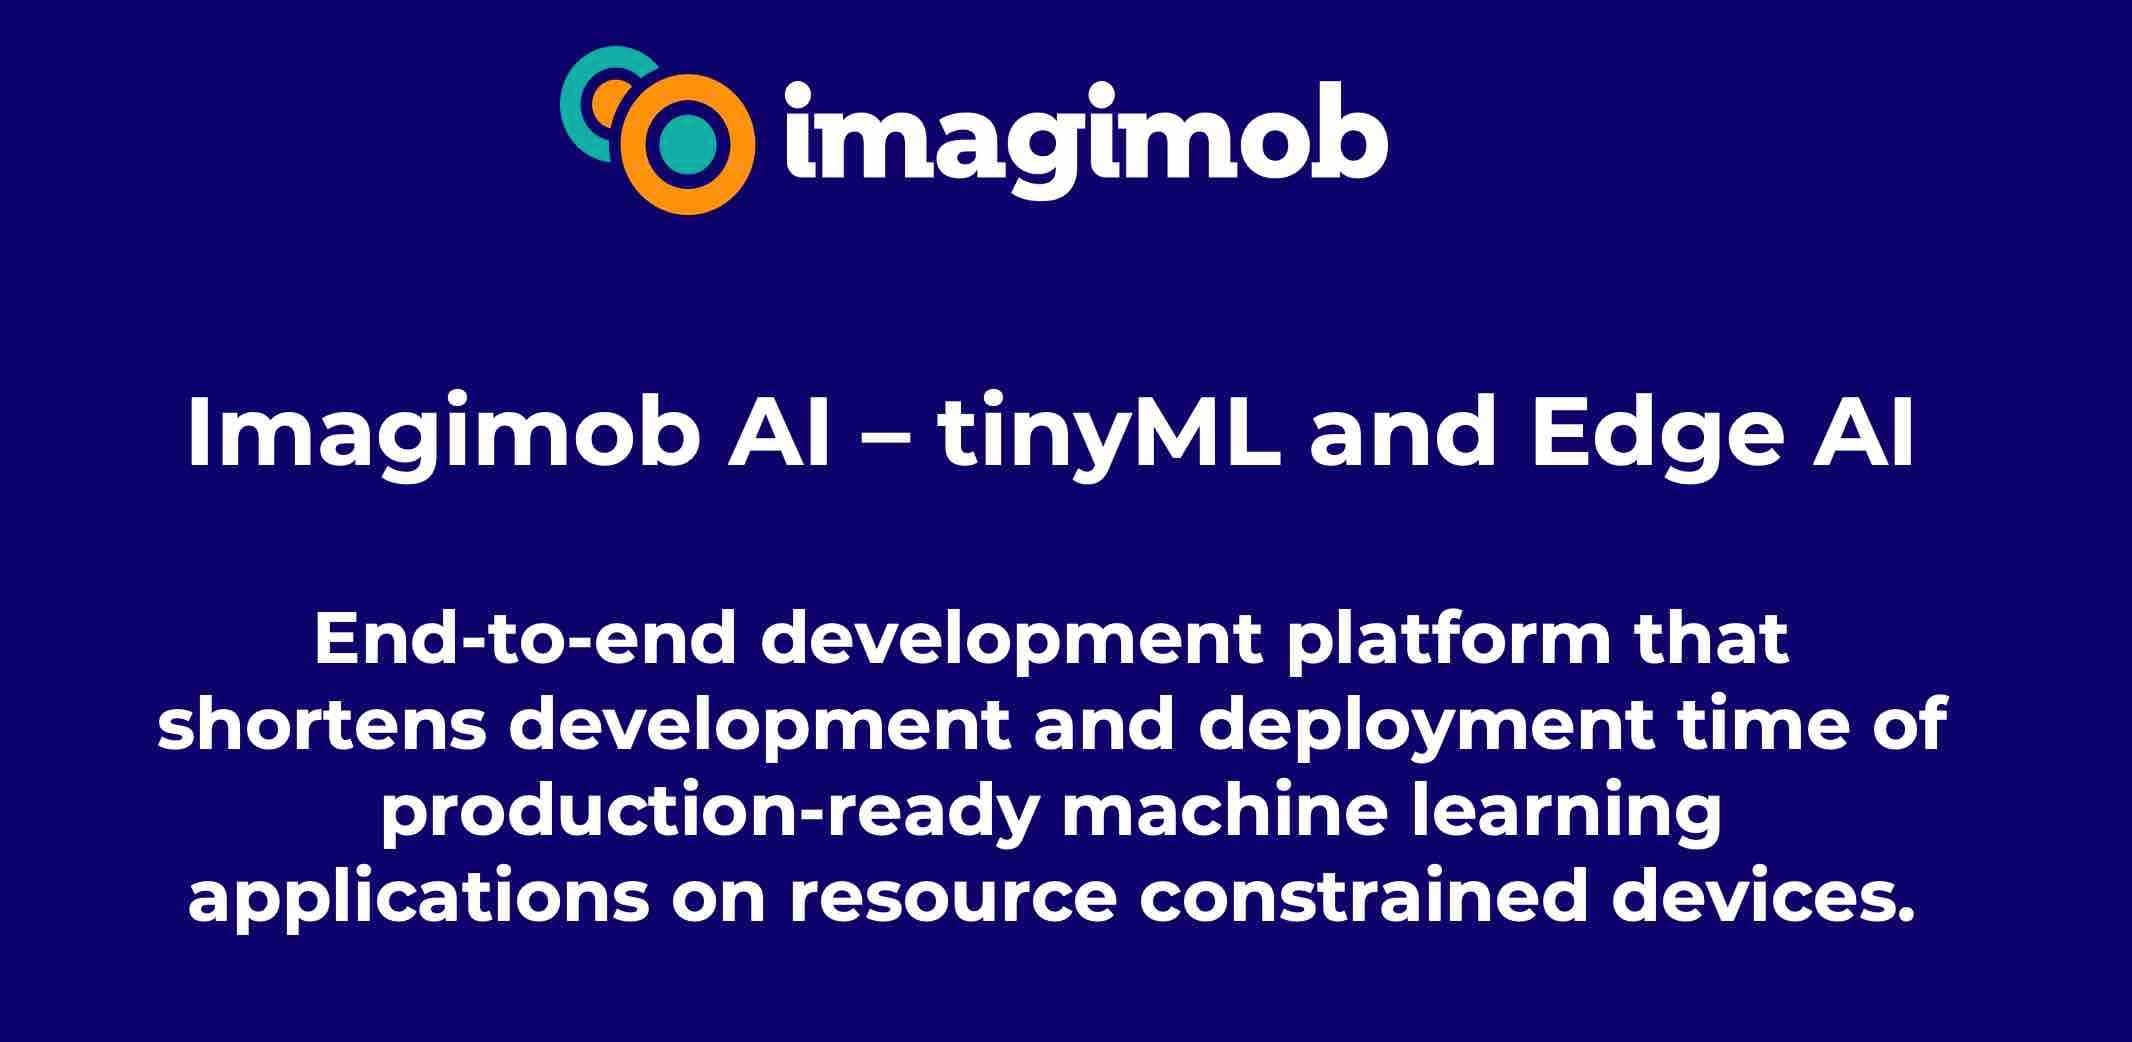 Imagimob Presentation July 2022